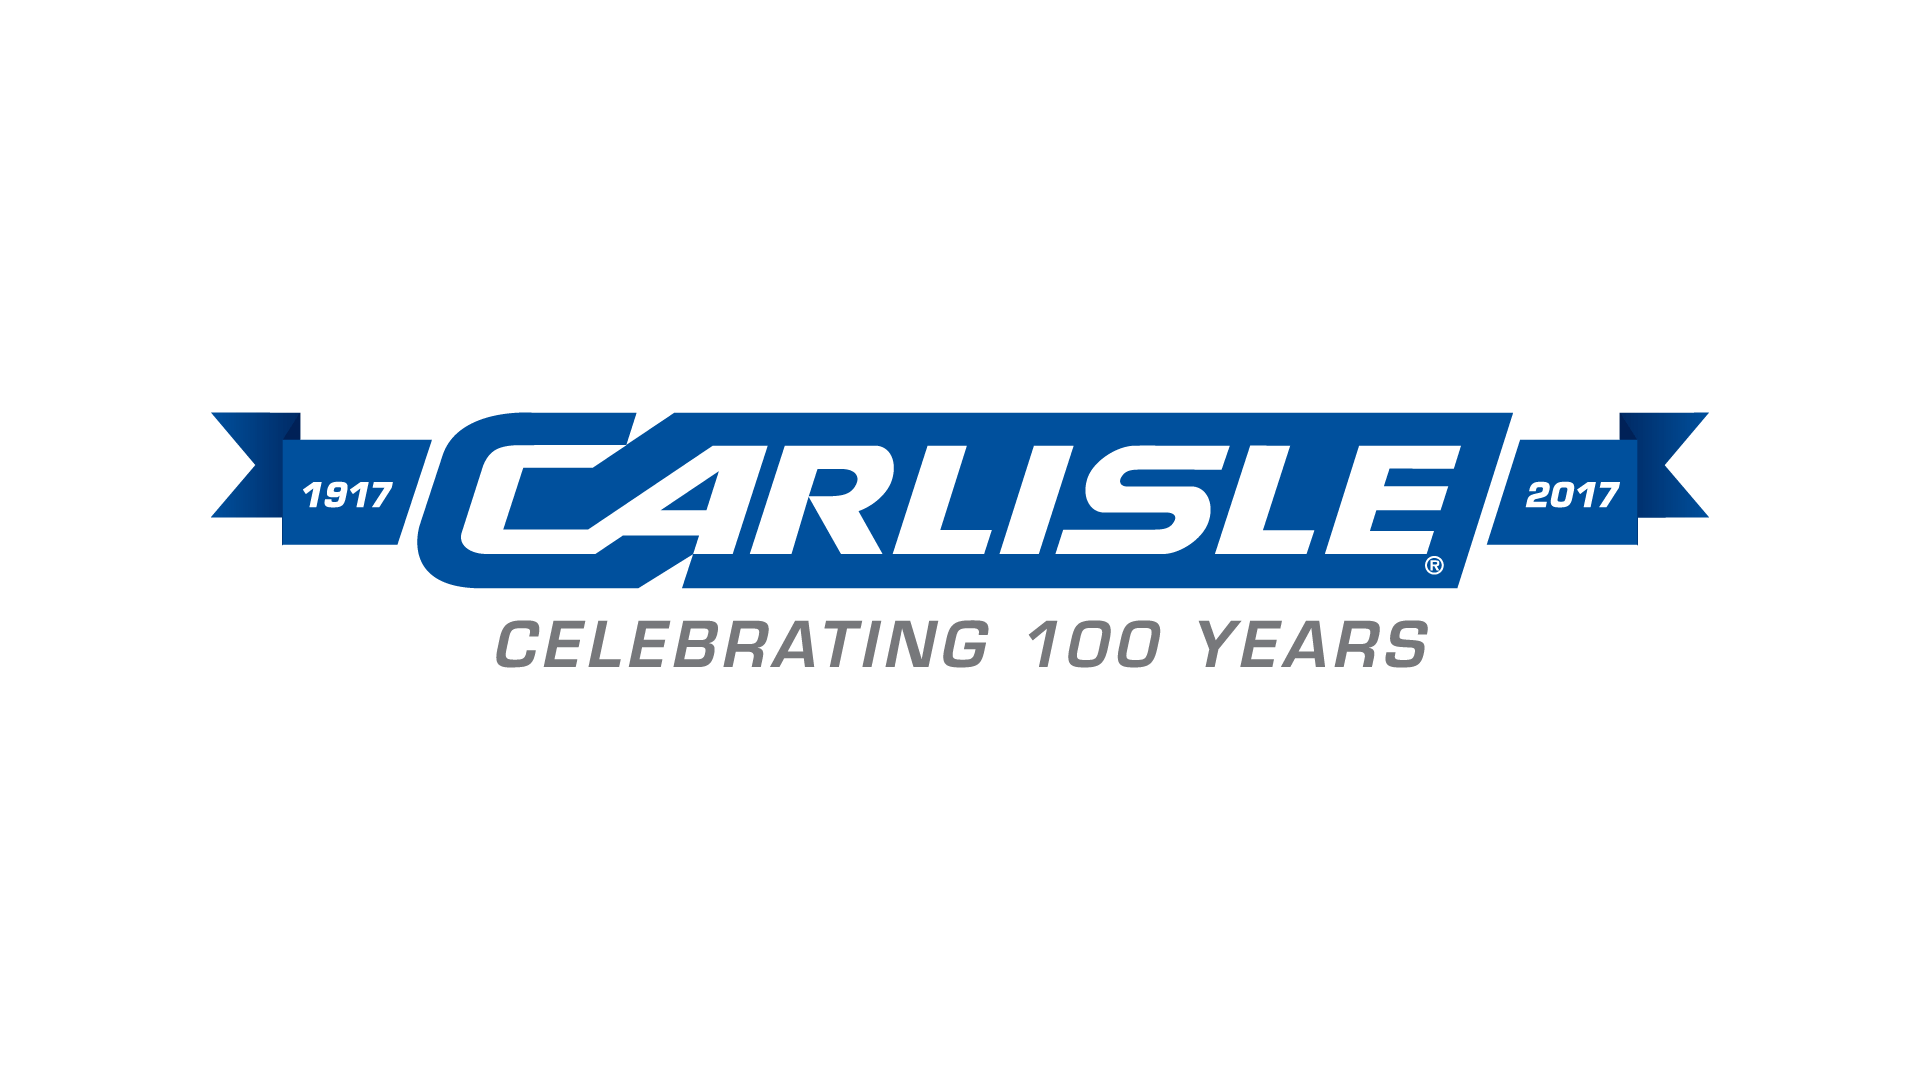 Carlisle Logo - Carlisle Companies Inc. (NYSE: CSL) Celebrates their 100th